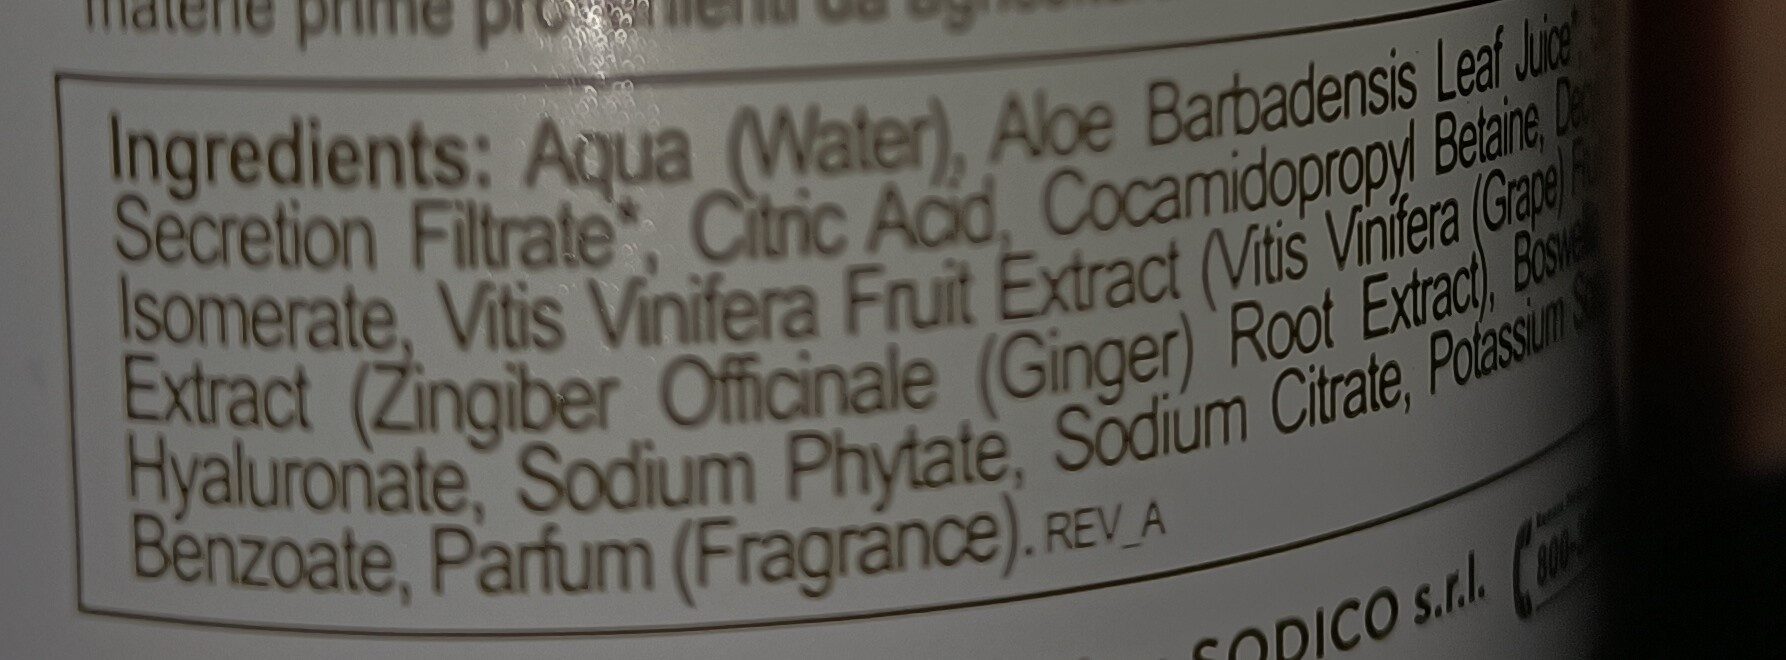 mousse detergente (bio organic) - Ingredients - en